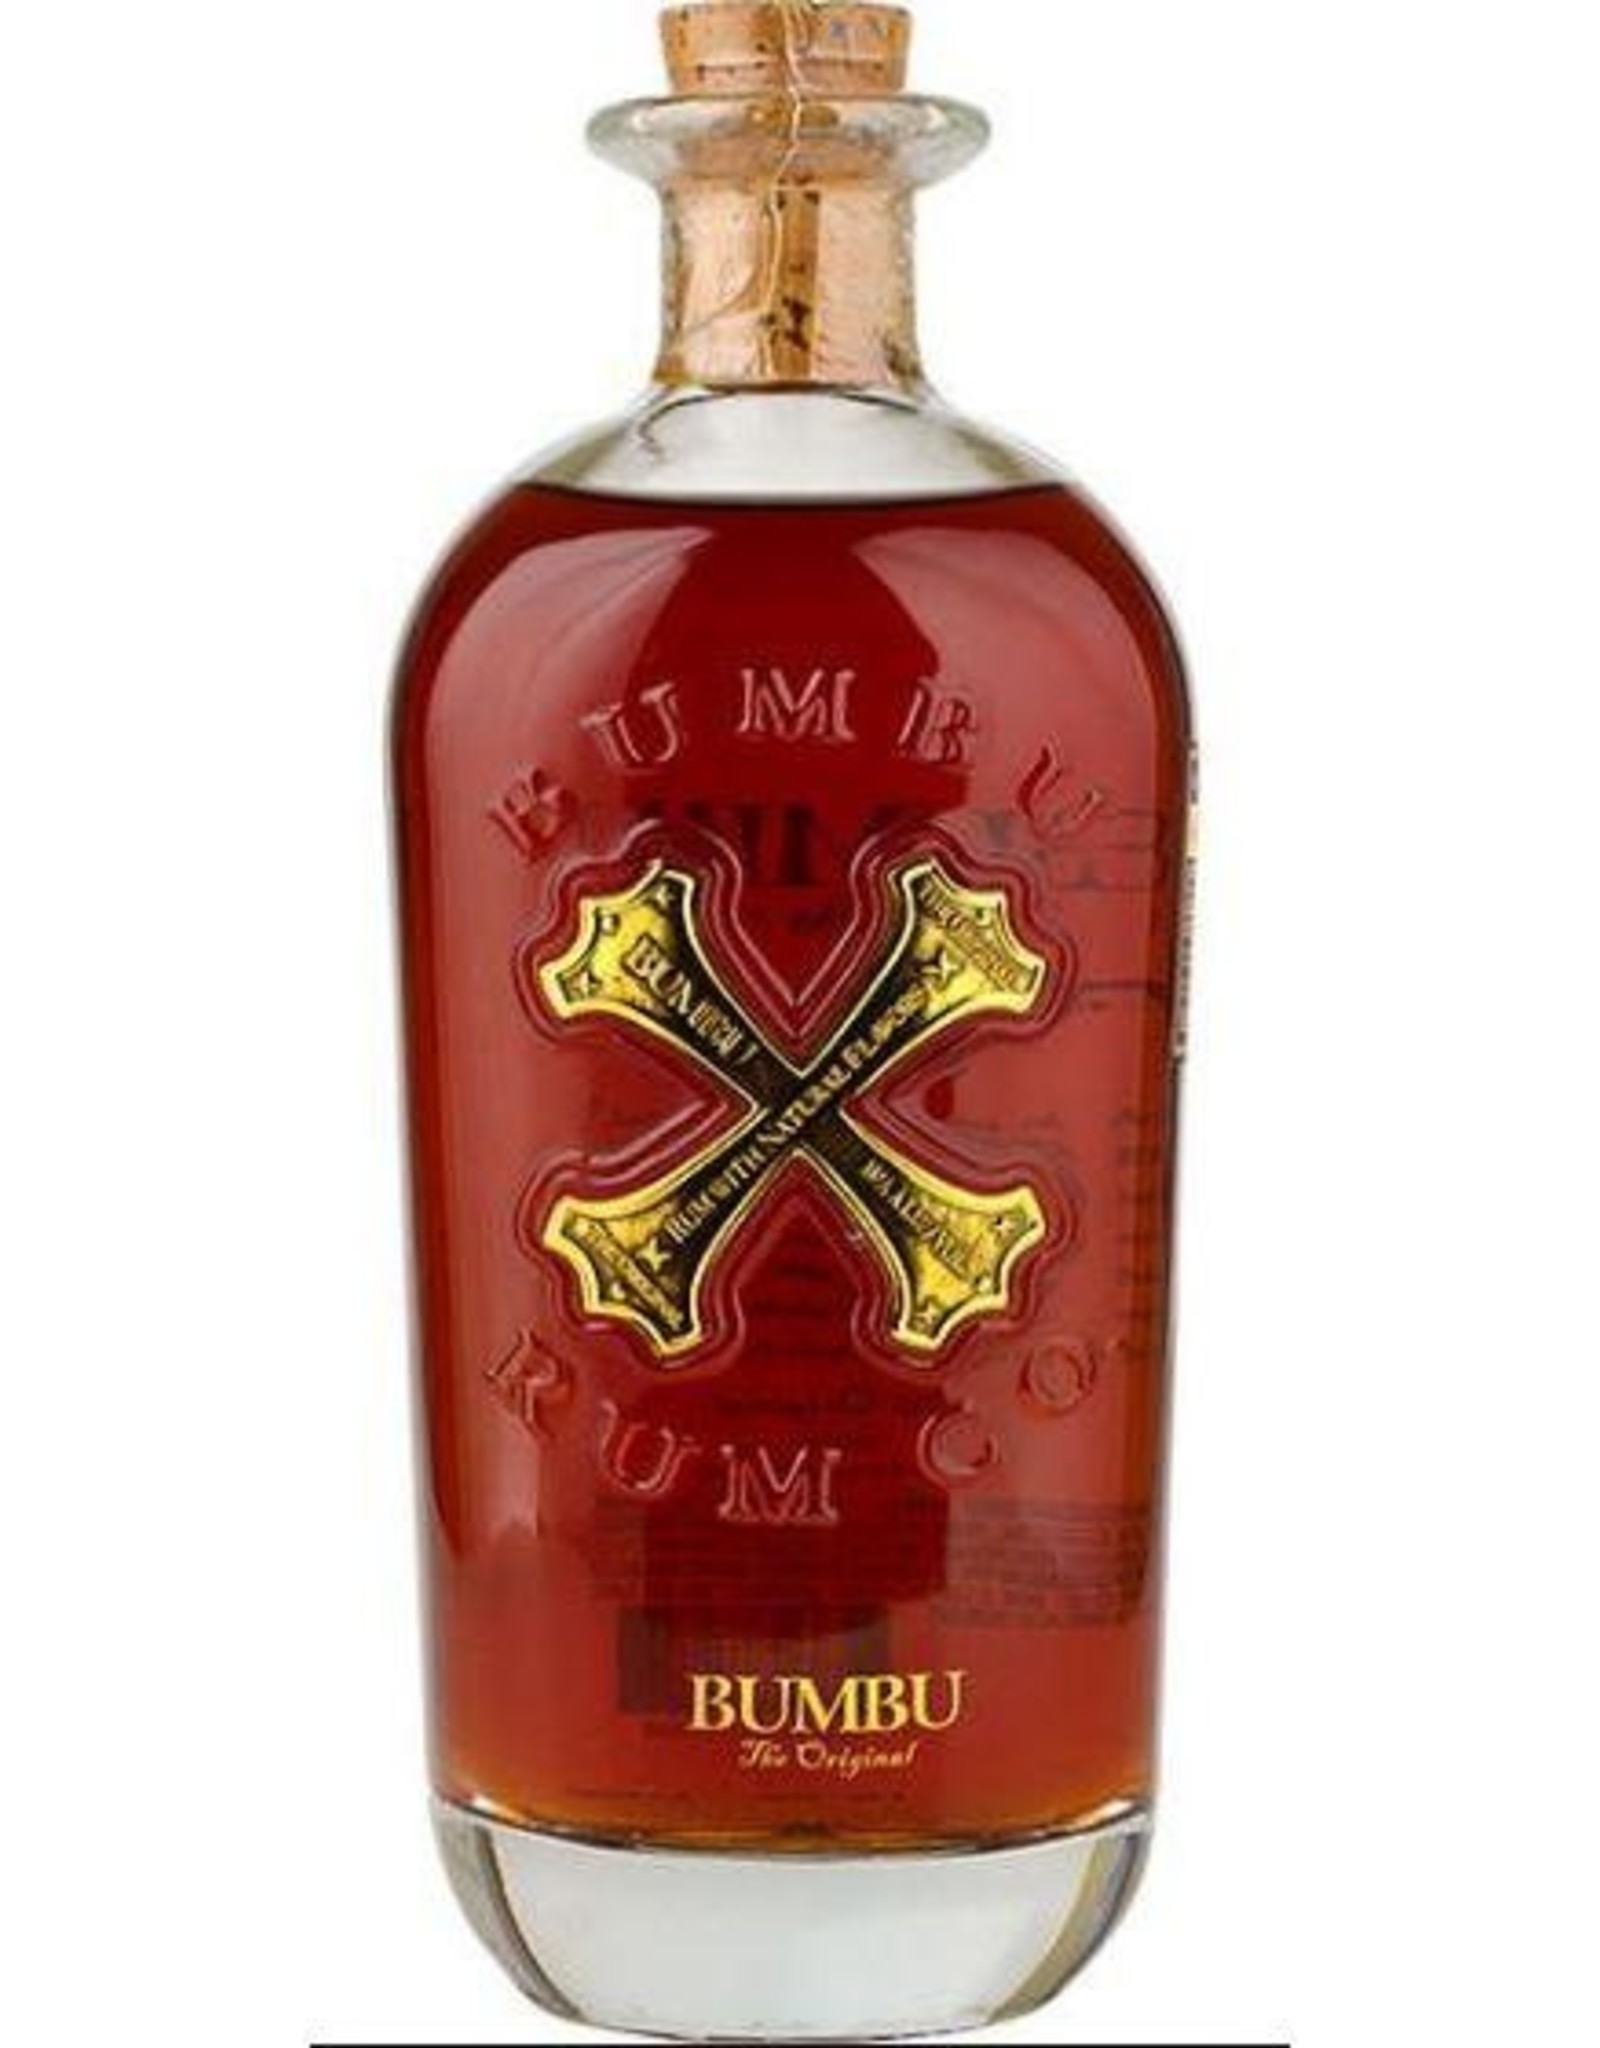 Bumbu Rum 375ml